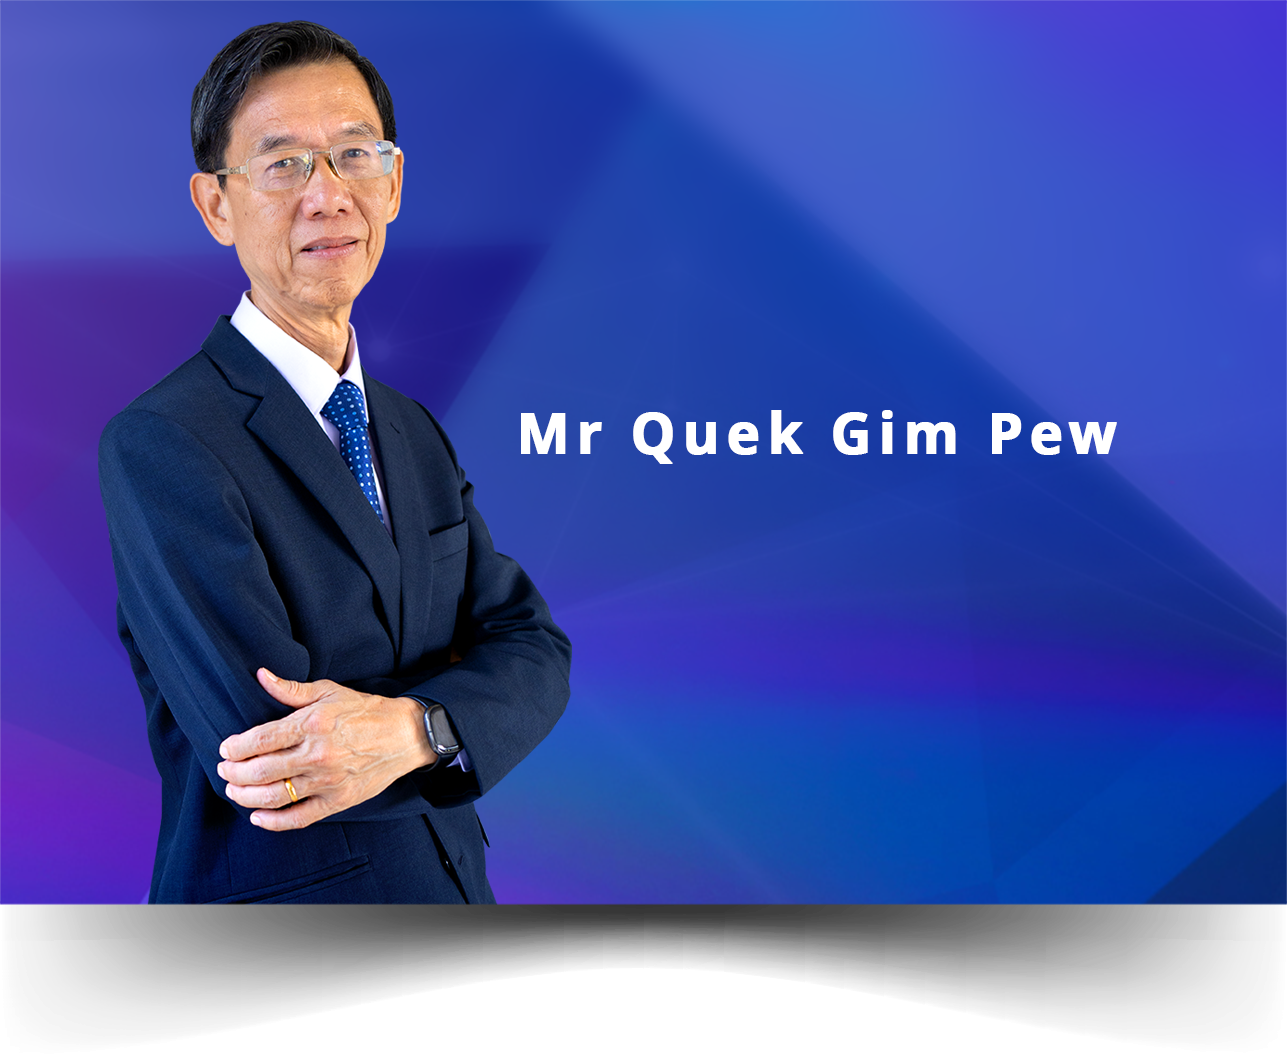 Mr Quek Gim Pew